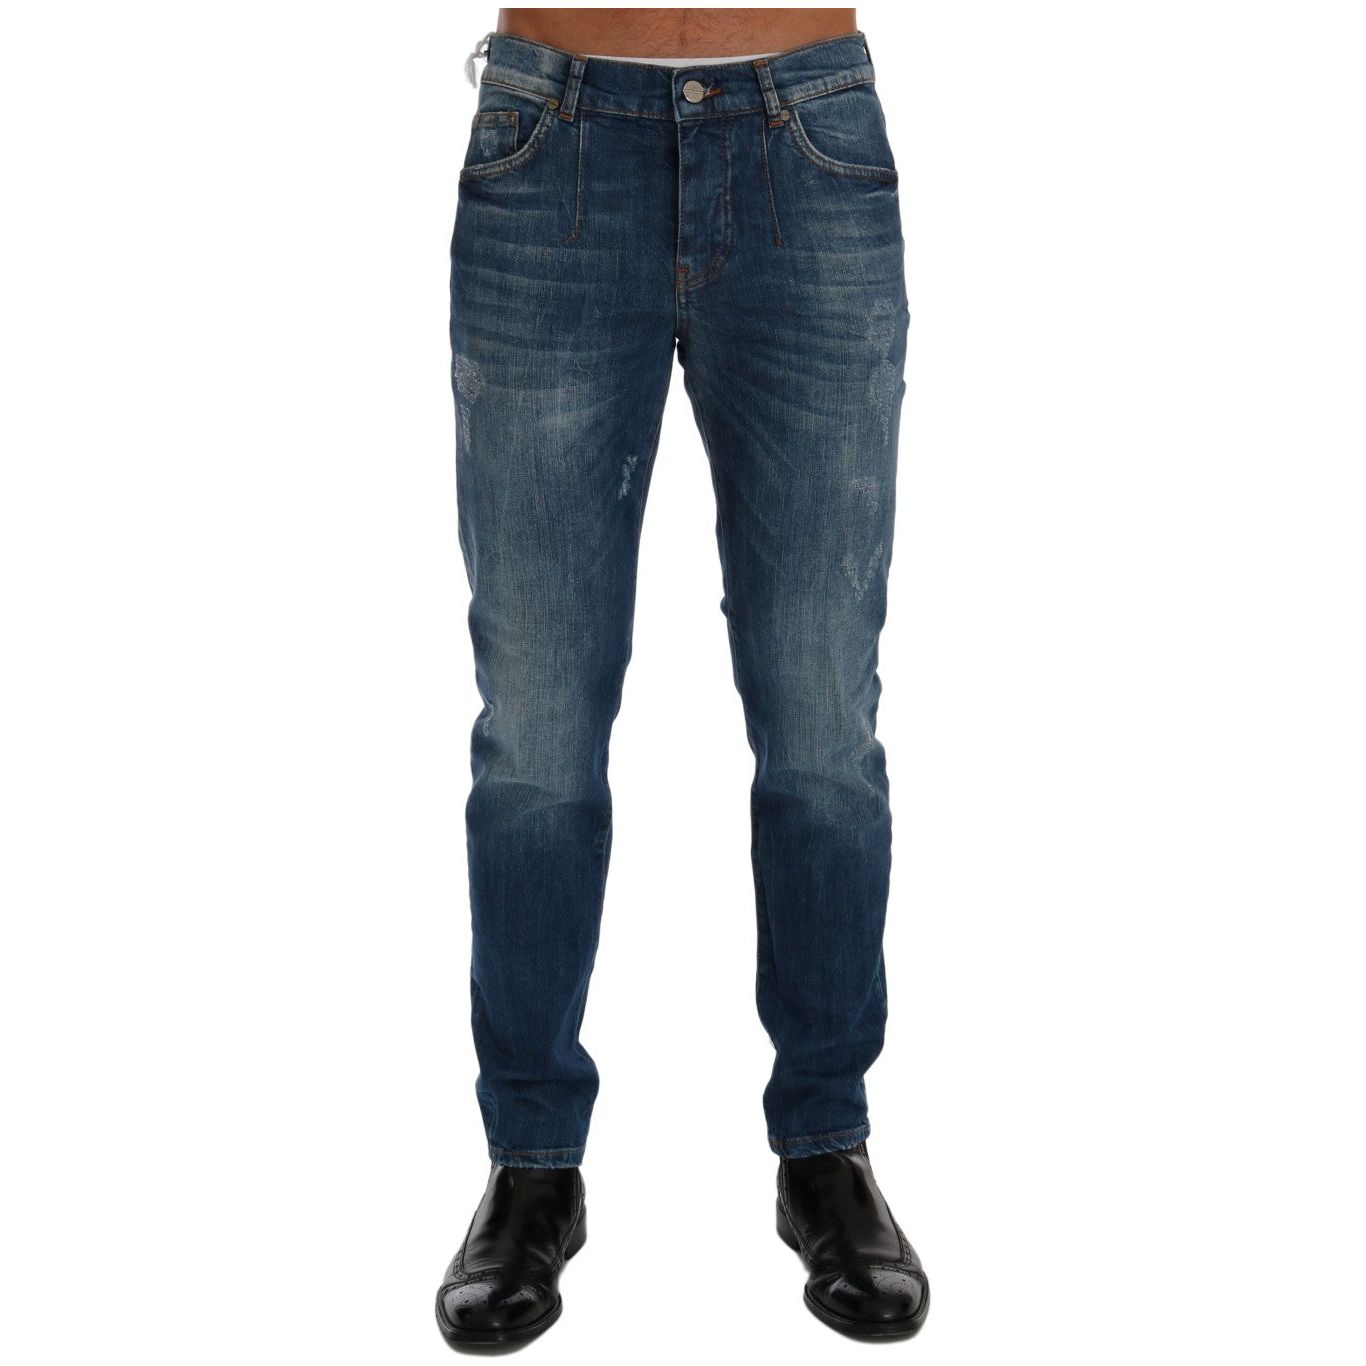 Frankie Morello Chic Slim Fit Blue Wash Jeans blue-wash-perth-slim-fit-jeans 420321-blue-wash-perth-slim-fit-jeans.jpg